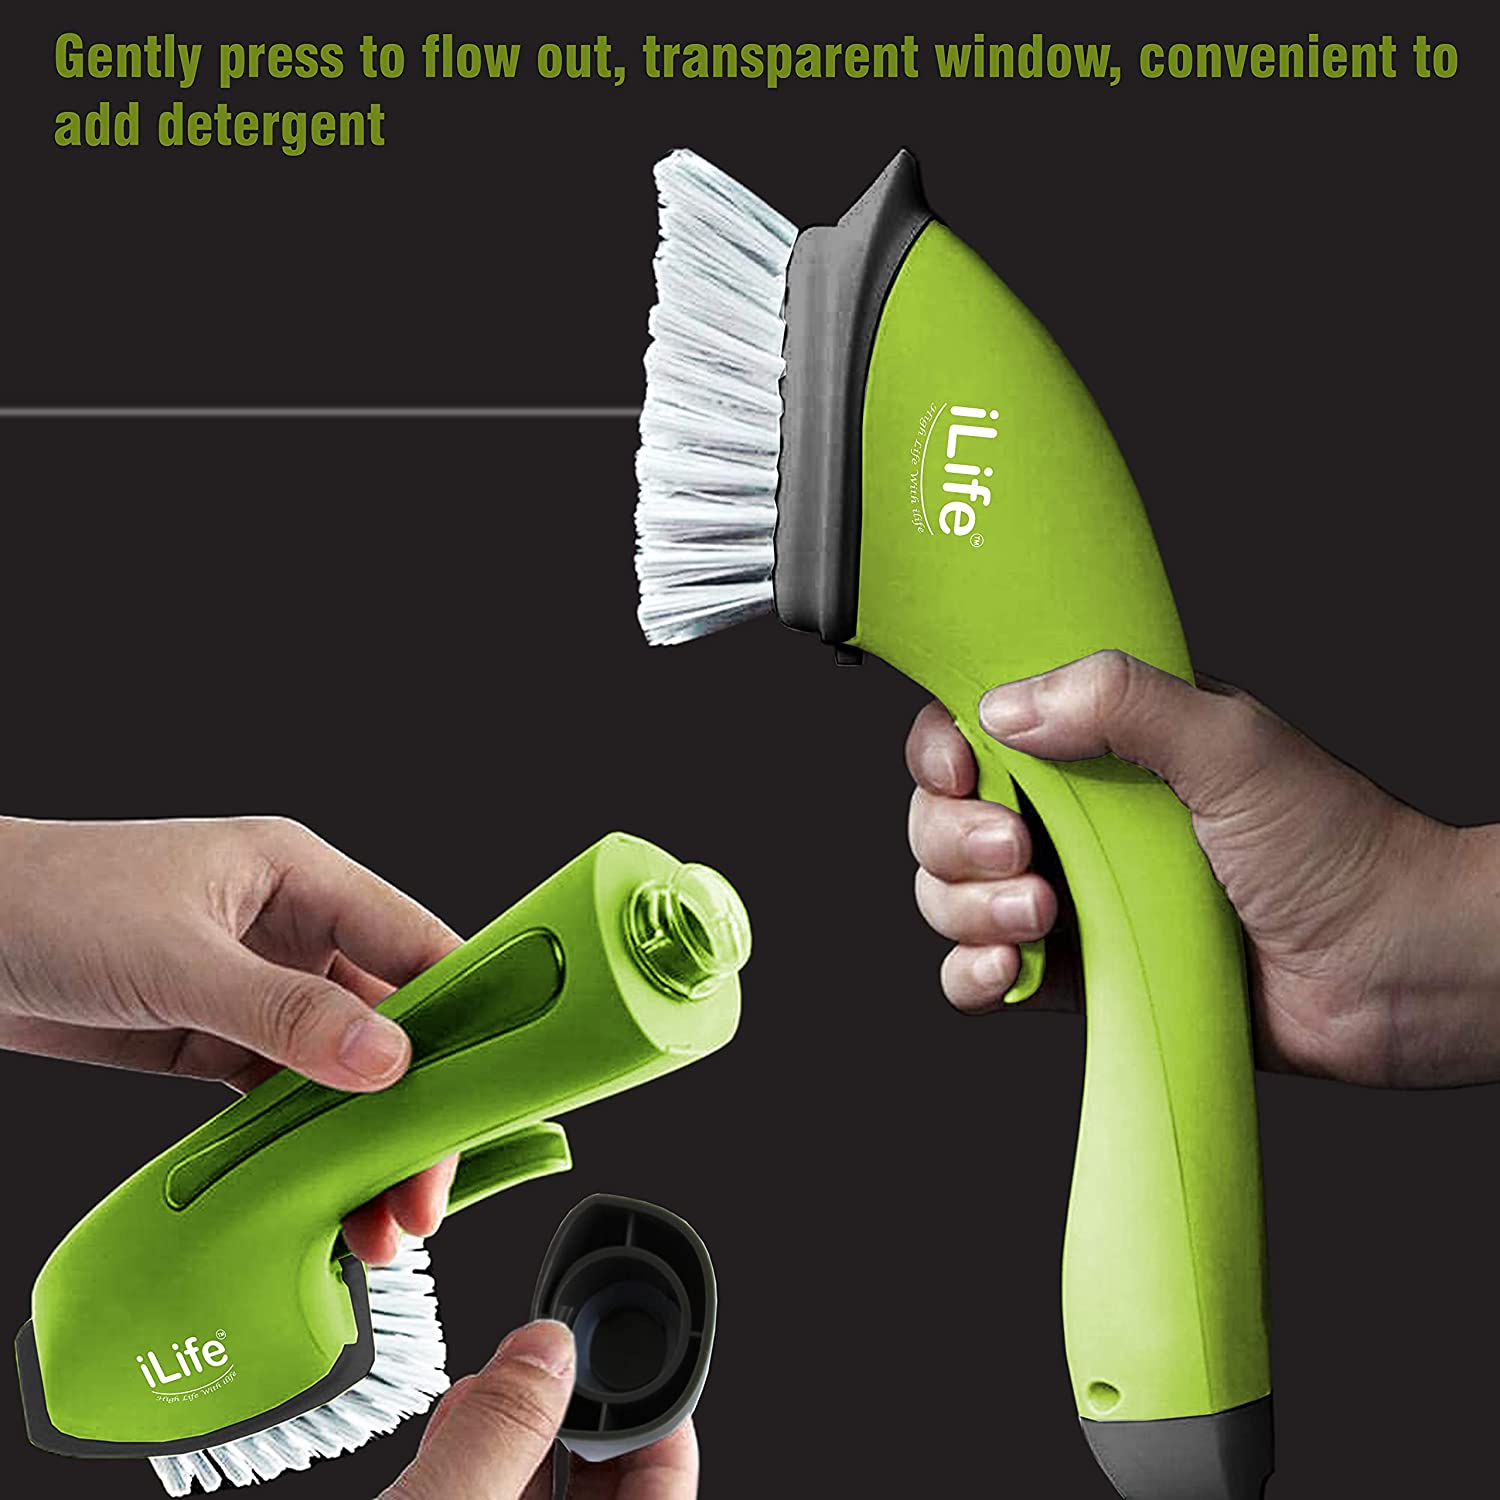 Heavy Duty Scrub Brush with Soap Dispenser Buy Online 